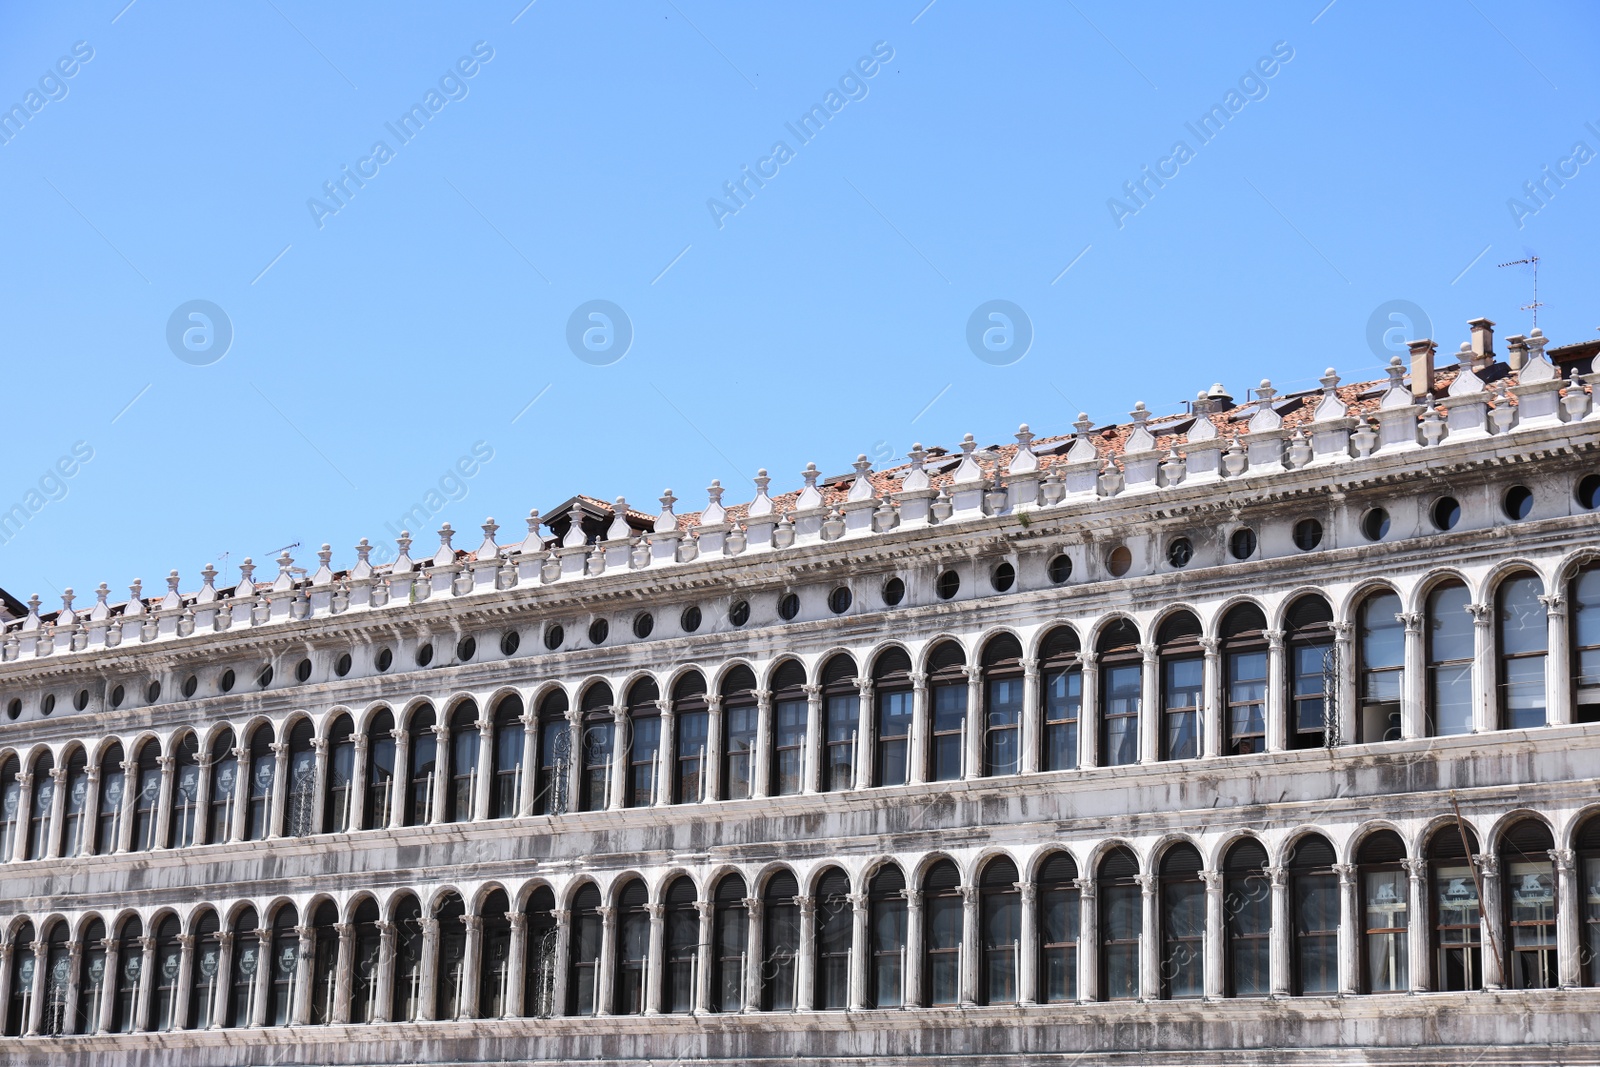 Photo of VENICE, ITALY - JUNE 13, 2019: Facade of Procuratie Nuove at St Mark's Square